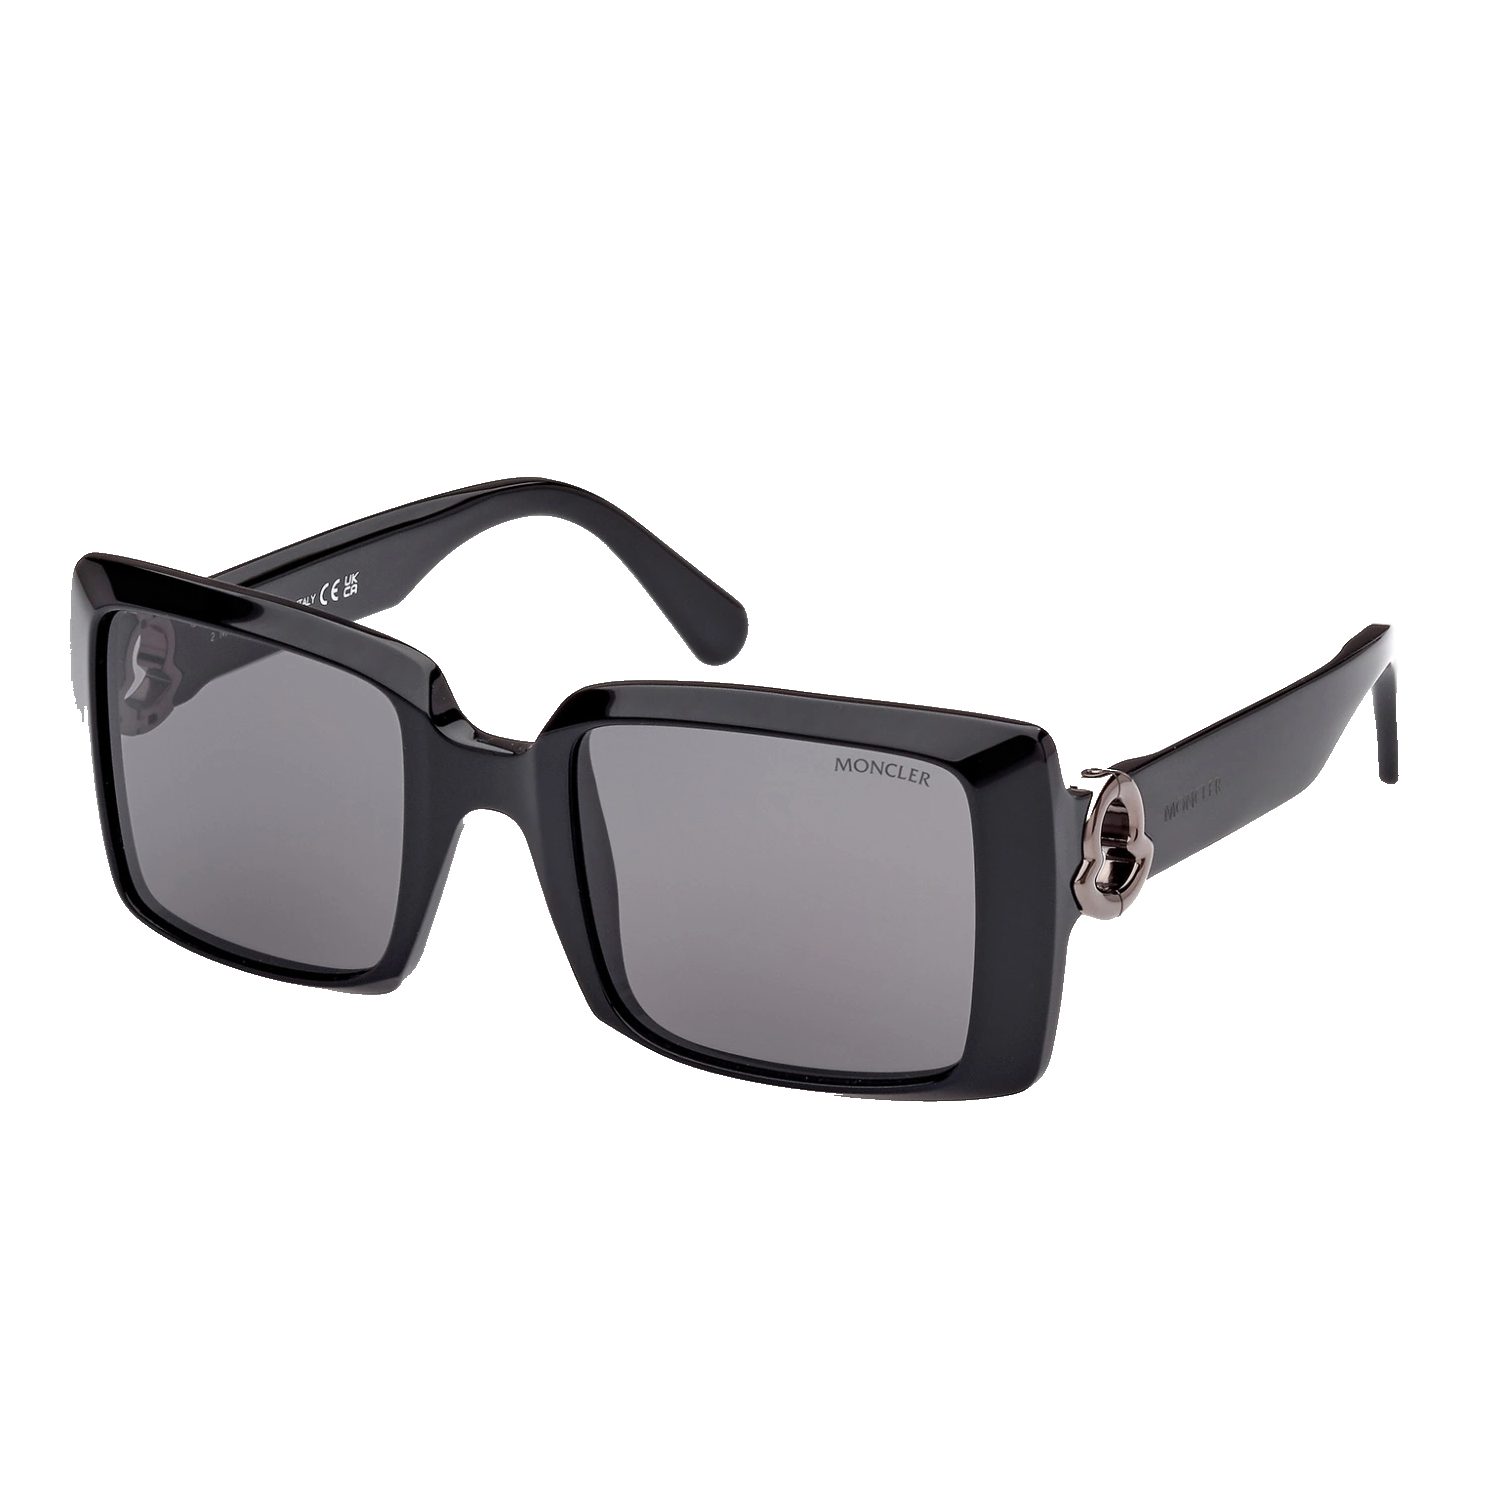 Moncler Sunglasses Moncler Sunglasses ML0244 01A 53mm Eyeglasses Eyewear UK USA Australia 